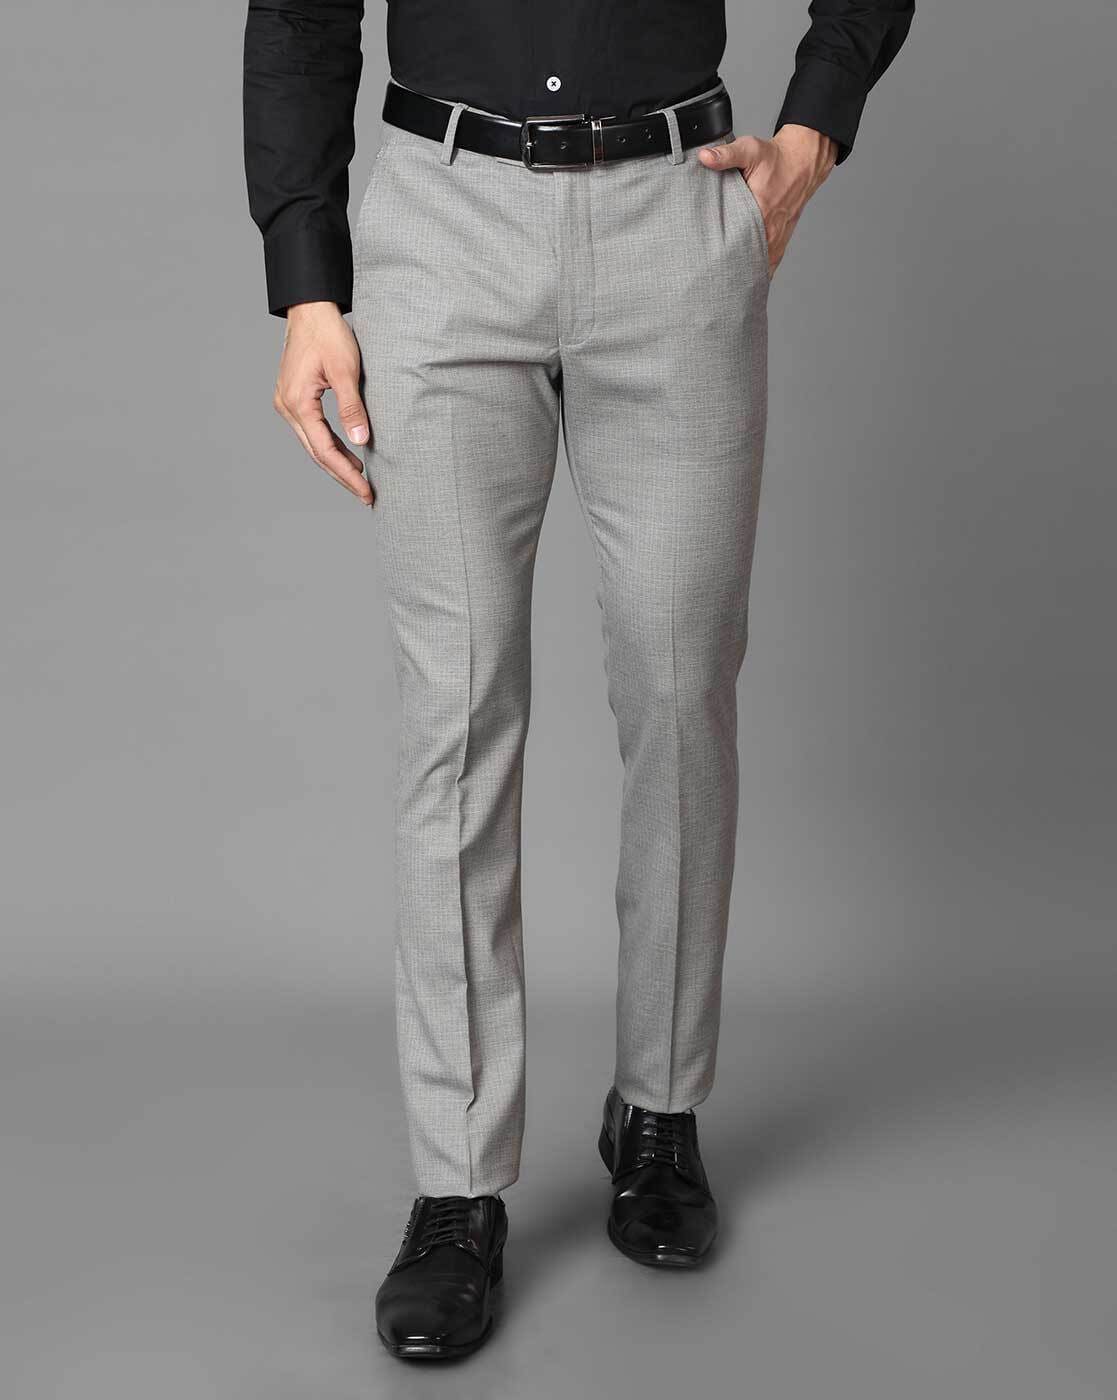 Buy SREY Formal Trouser Pant for Men Silver at Amazonin